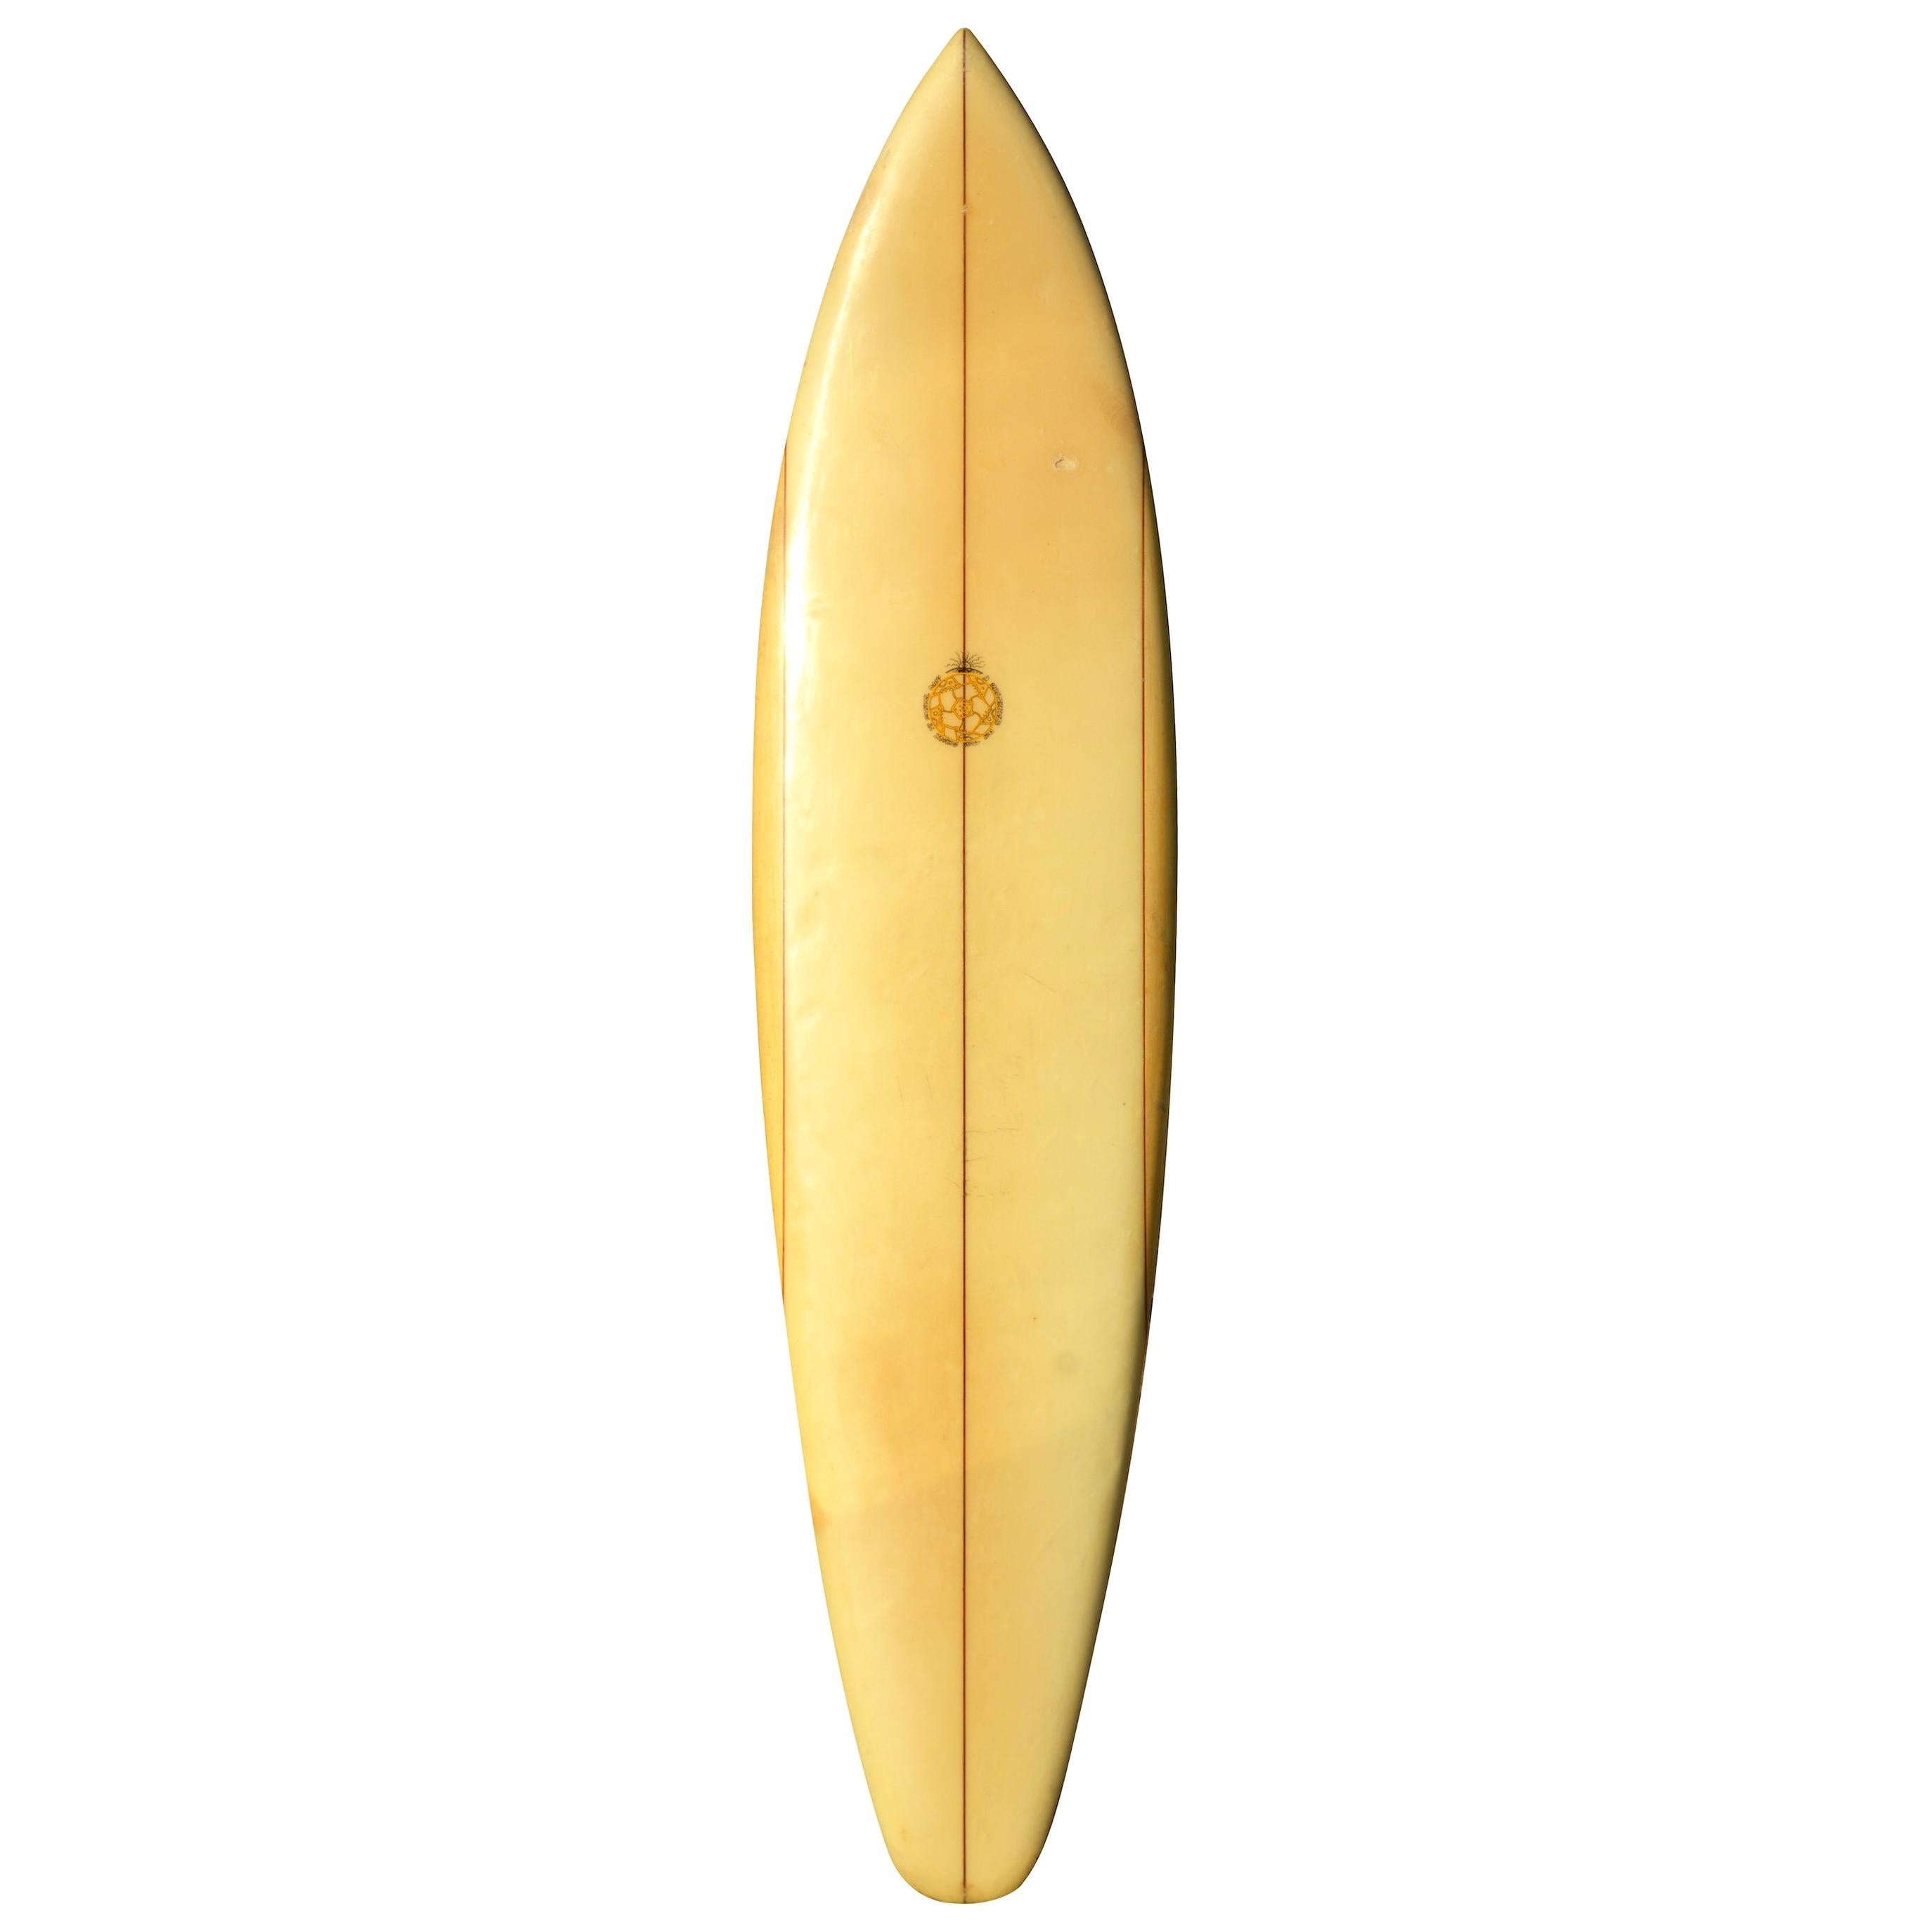 Vintage 1970s Newport Beach Brotherhood Surfboard by Michael O’Day